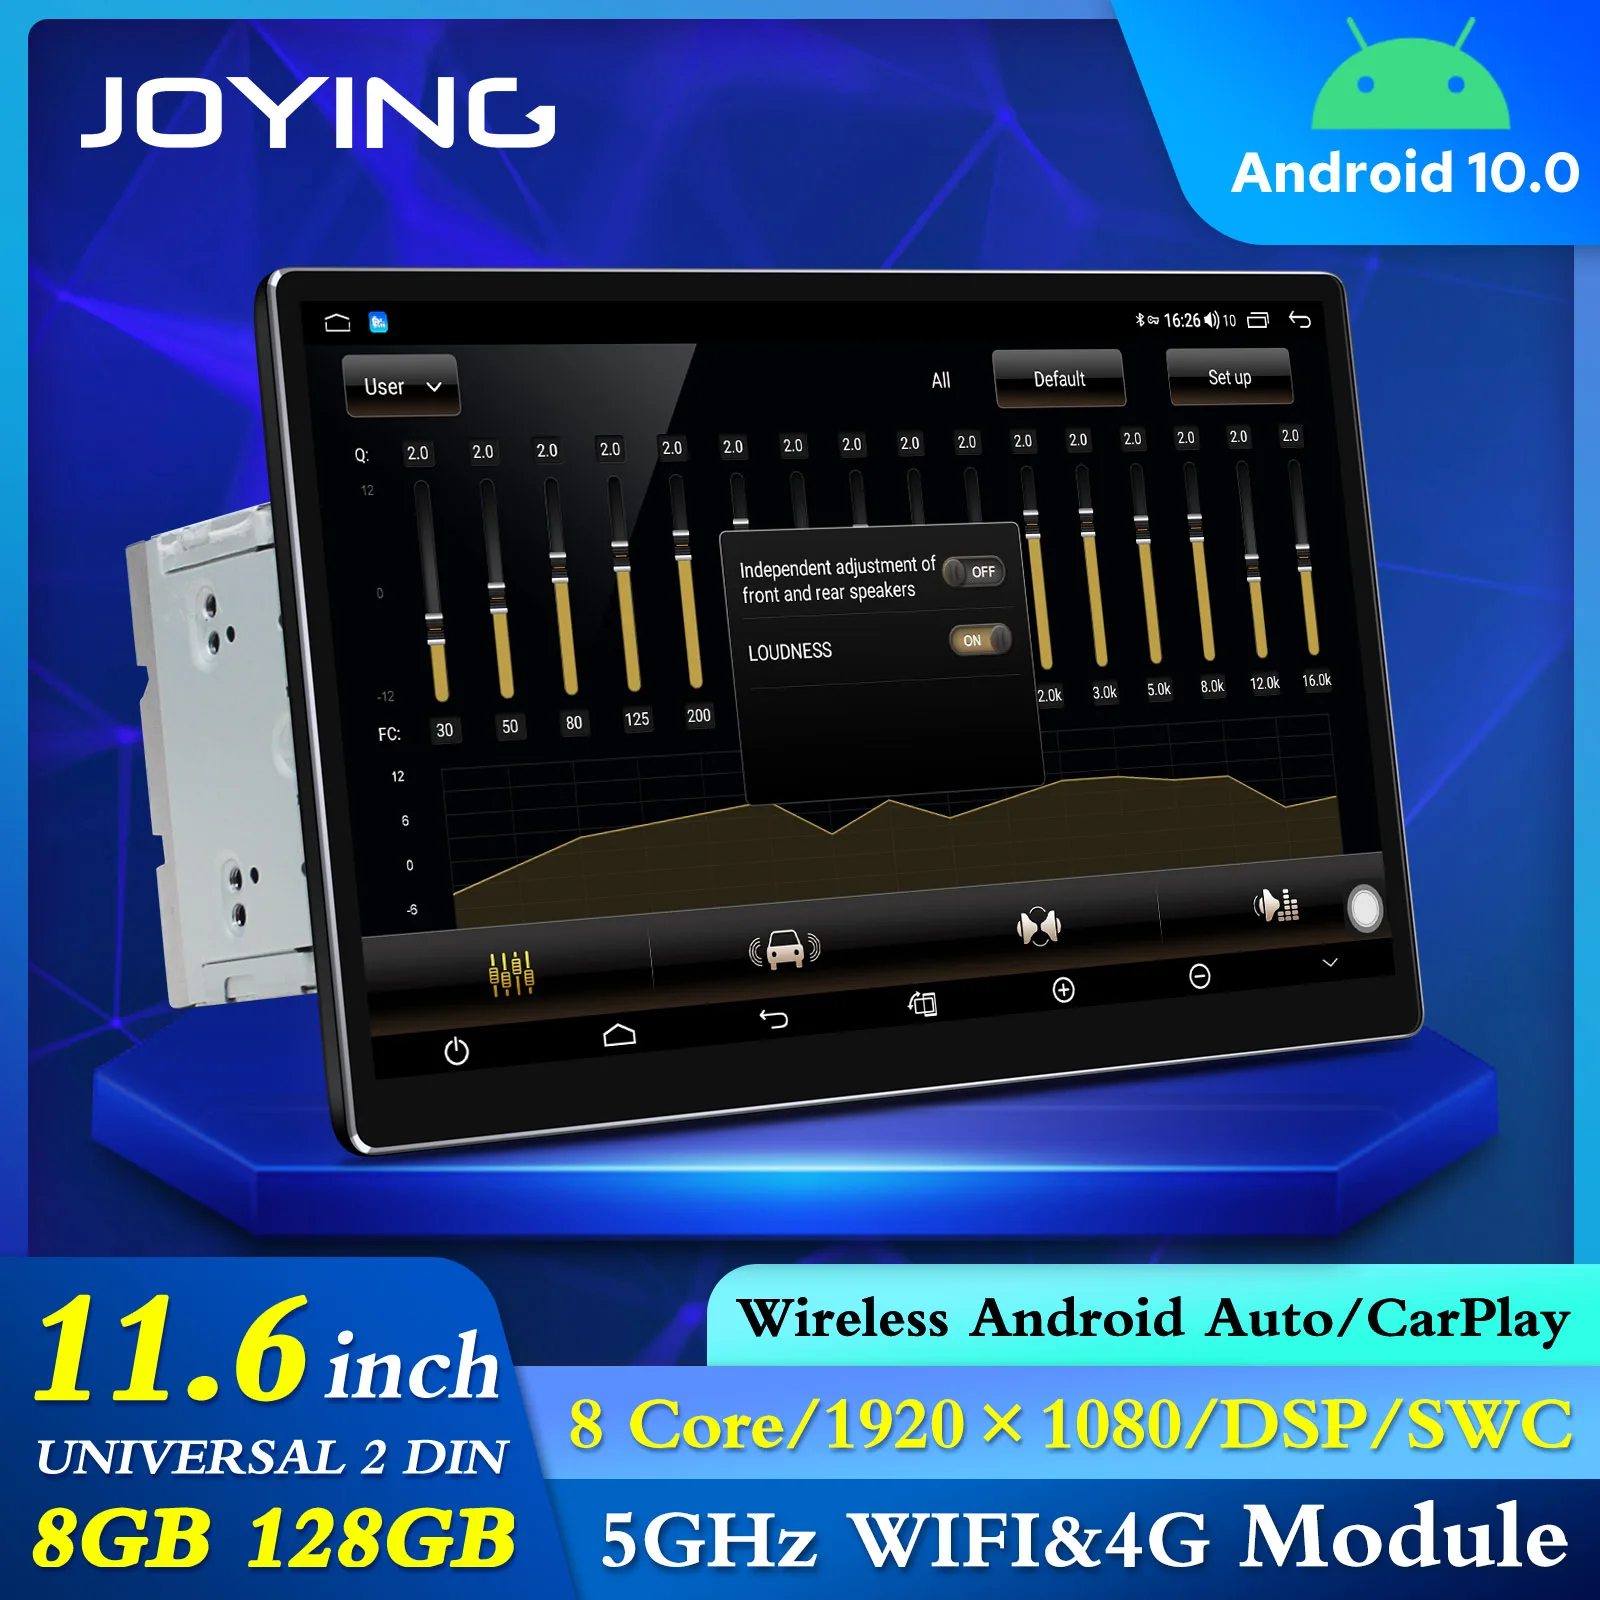 

Joying 8GB 128GB Android Car Radio Multimedia DVD Autoradio 2Din Universal 11.6” HD1920*1080 Tape Recorder Carplay Car Audio GPS